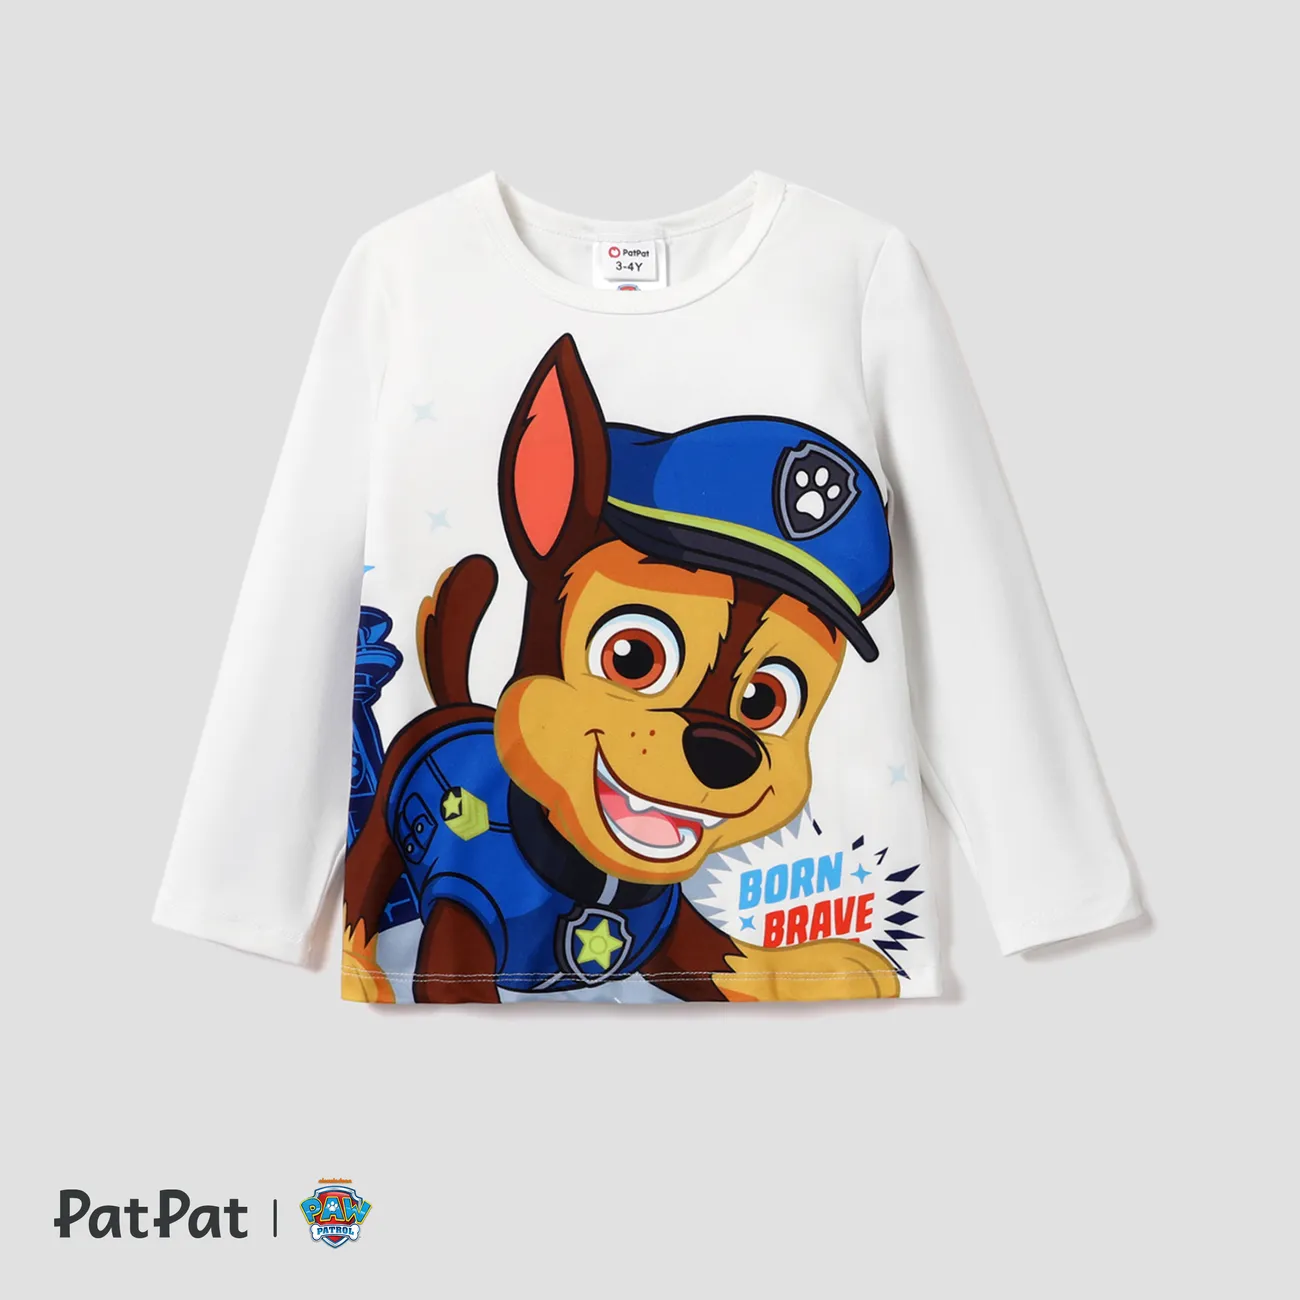 PAW Patrol Toddler Boy Character Print White Top or Blue Waistcoat or Black Pants White big image 1